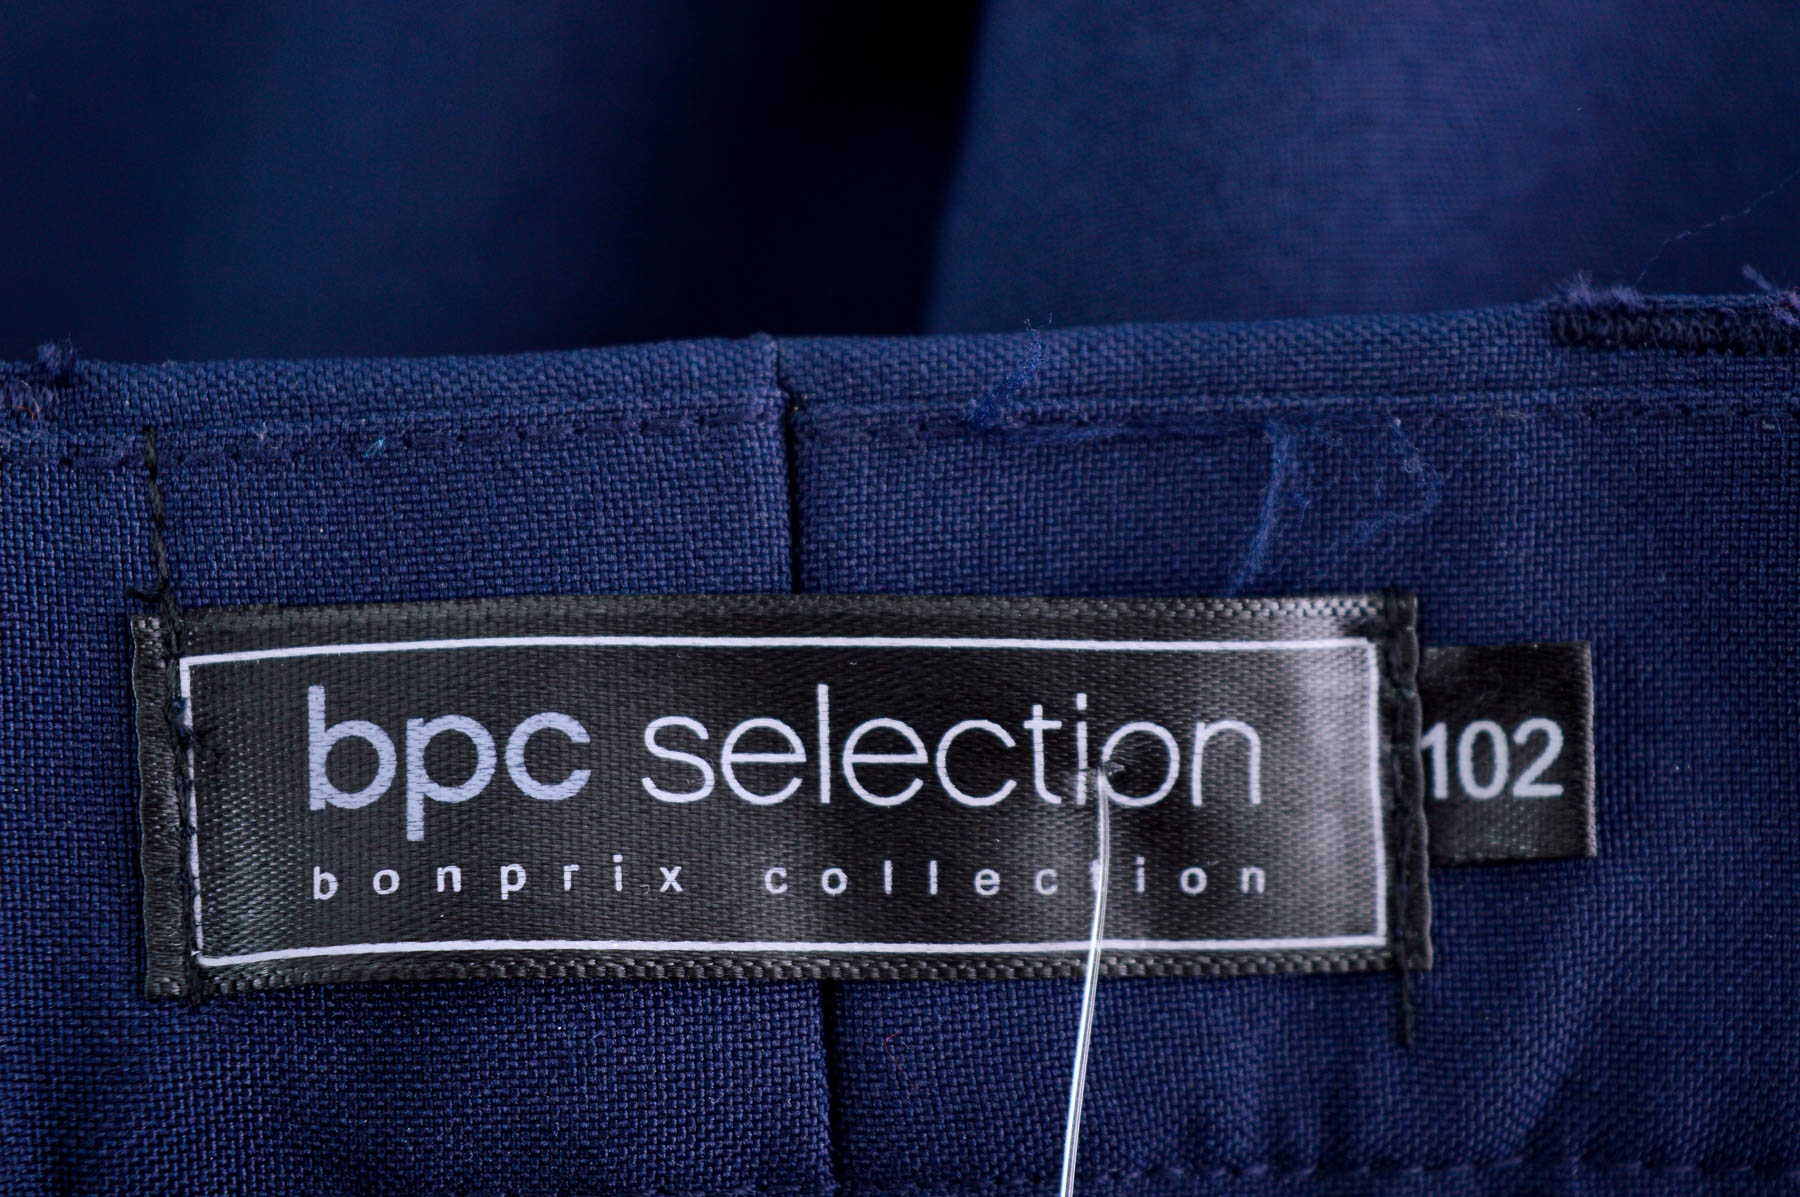 Pantalon pentru bărbați - Bpc Selection Bonprix Collection - 2